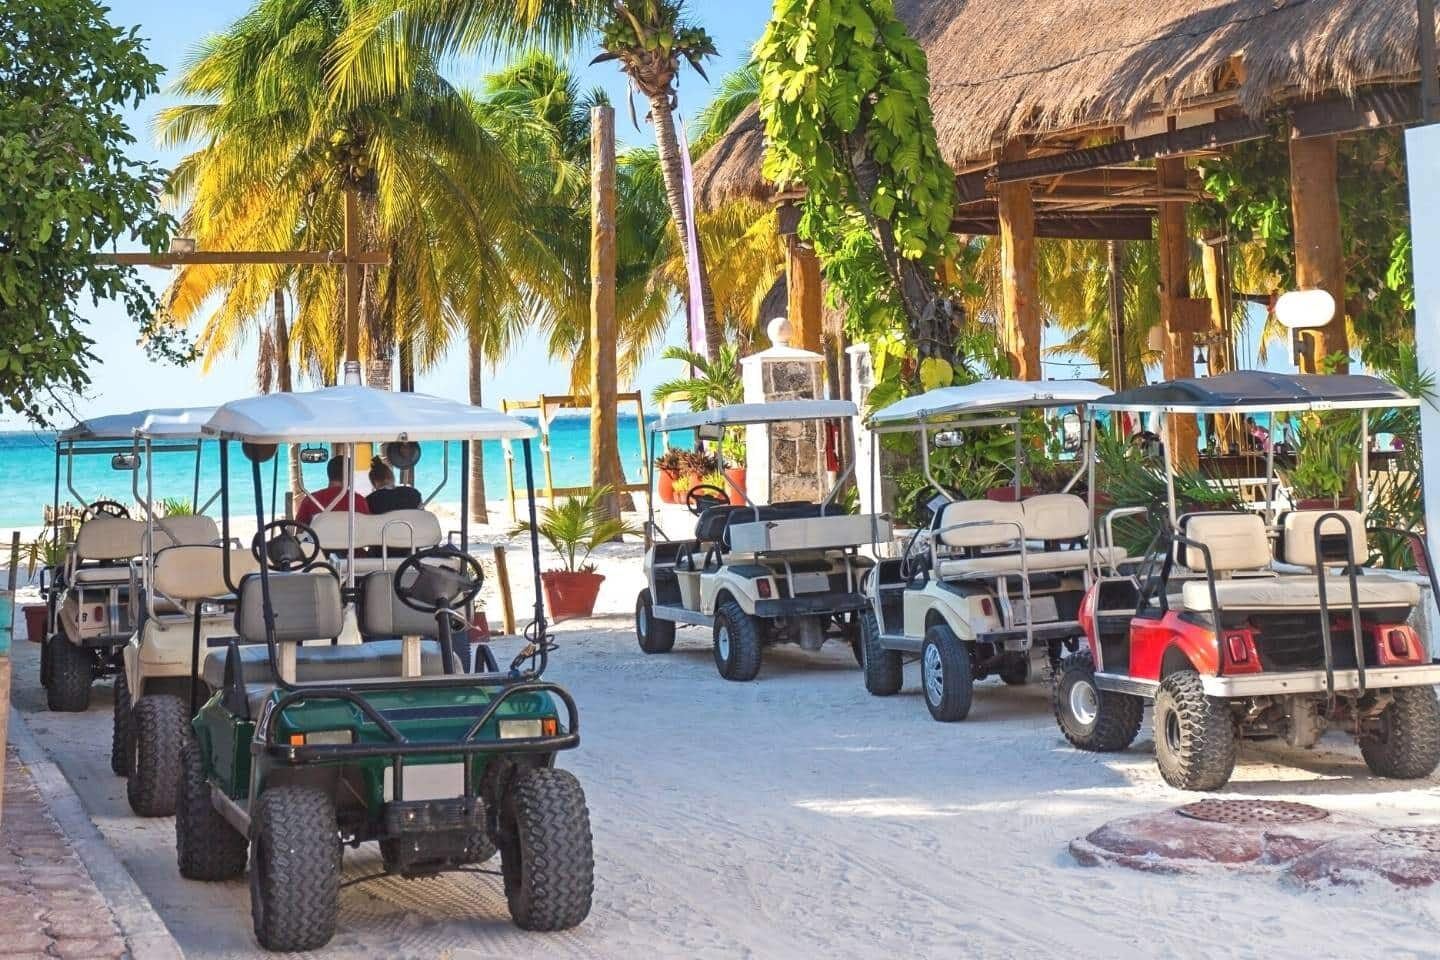 Row golf carts in Mexico